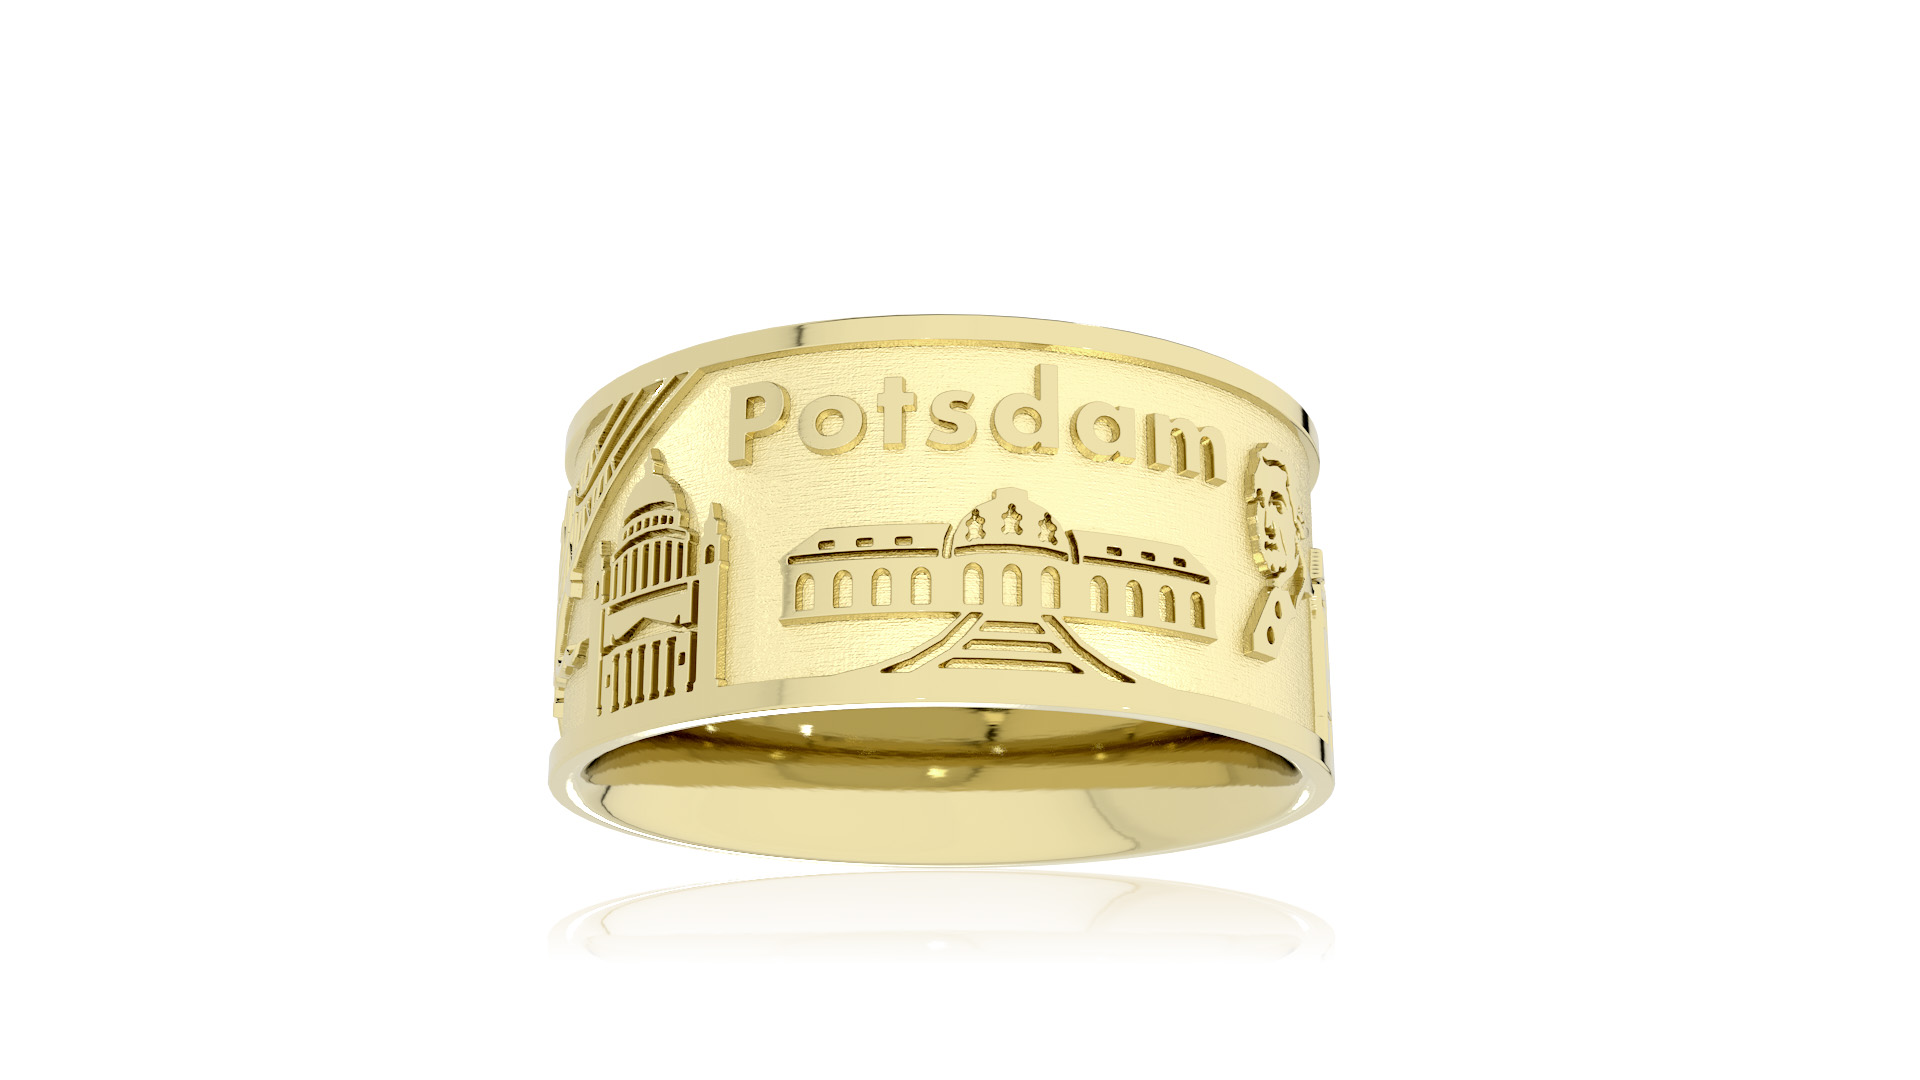 City ring Potsdam 585 yellow gold